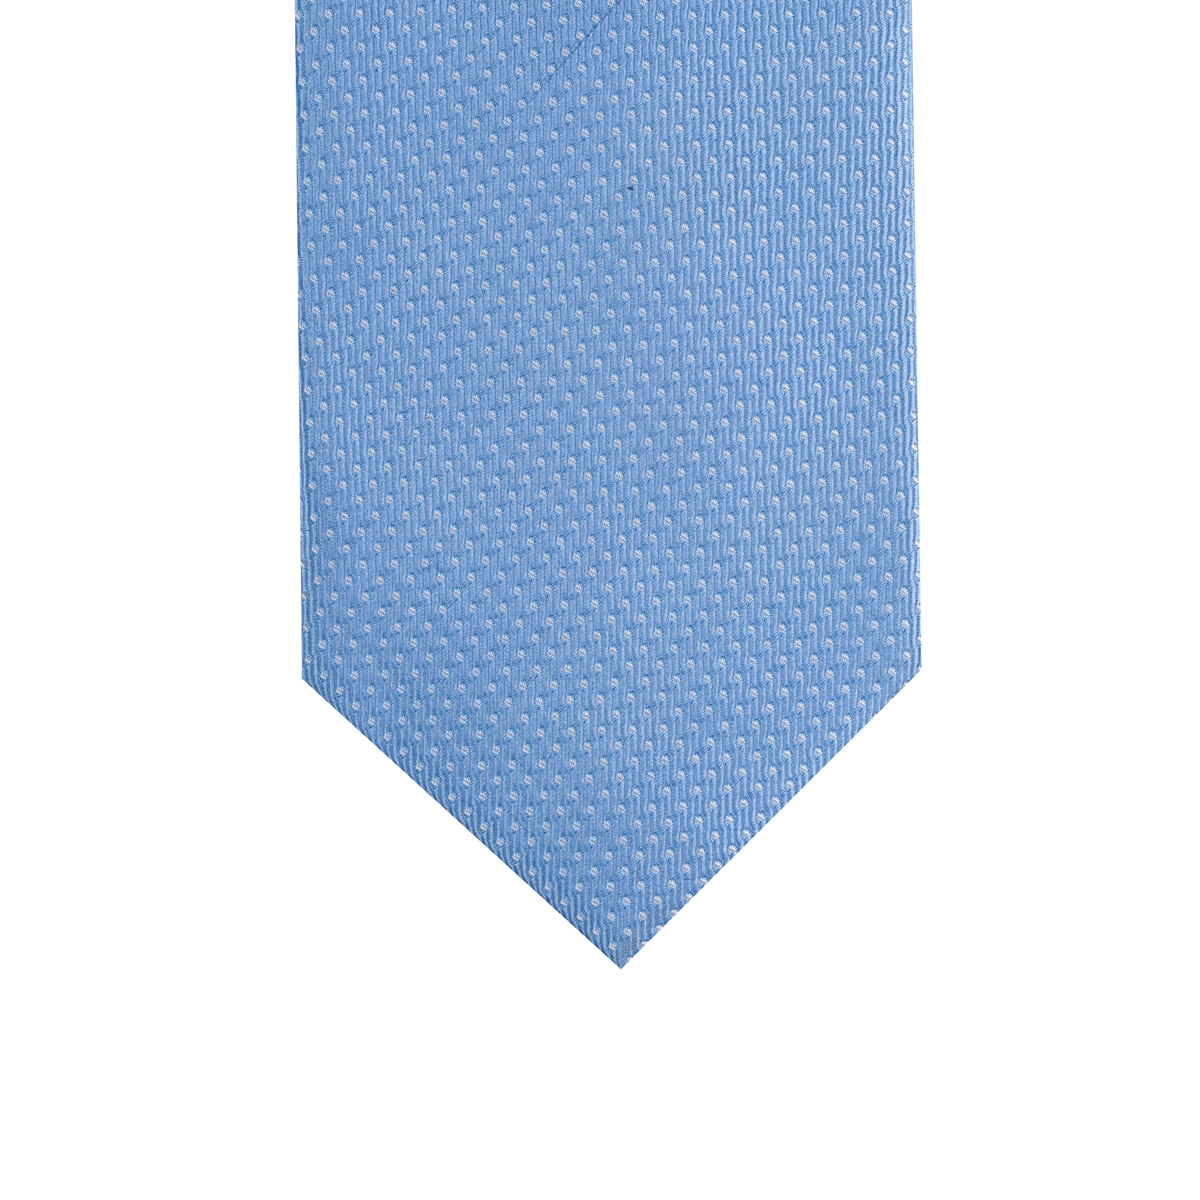 Krawatte glatt mit feinen Punkten in hellblau